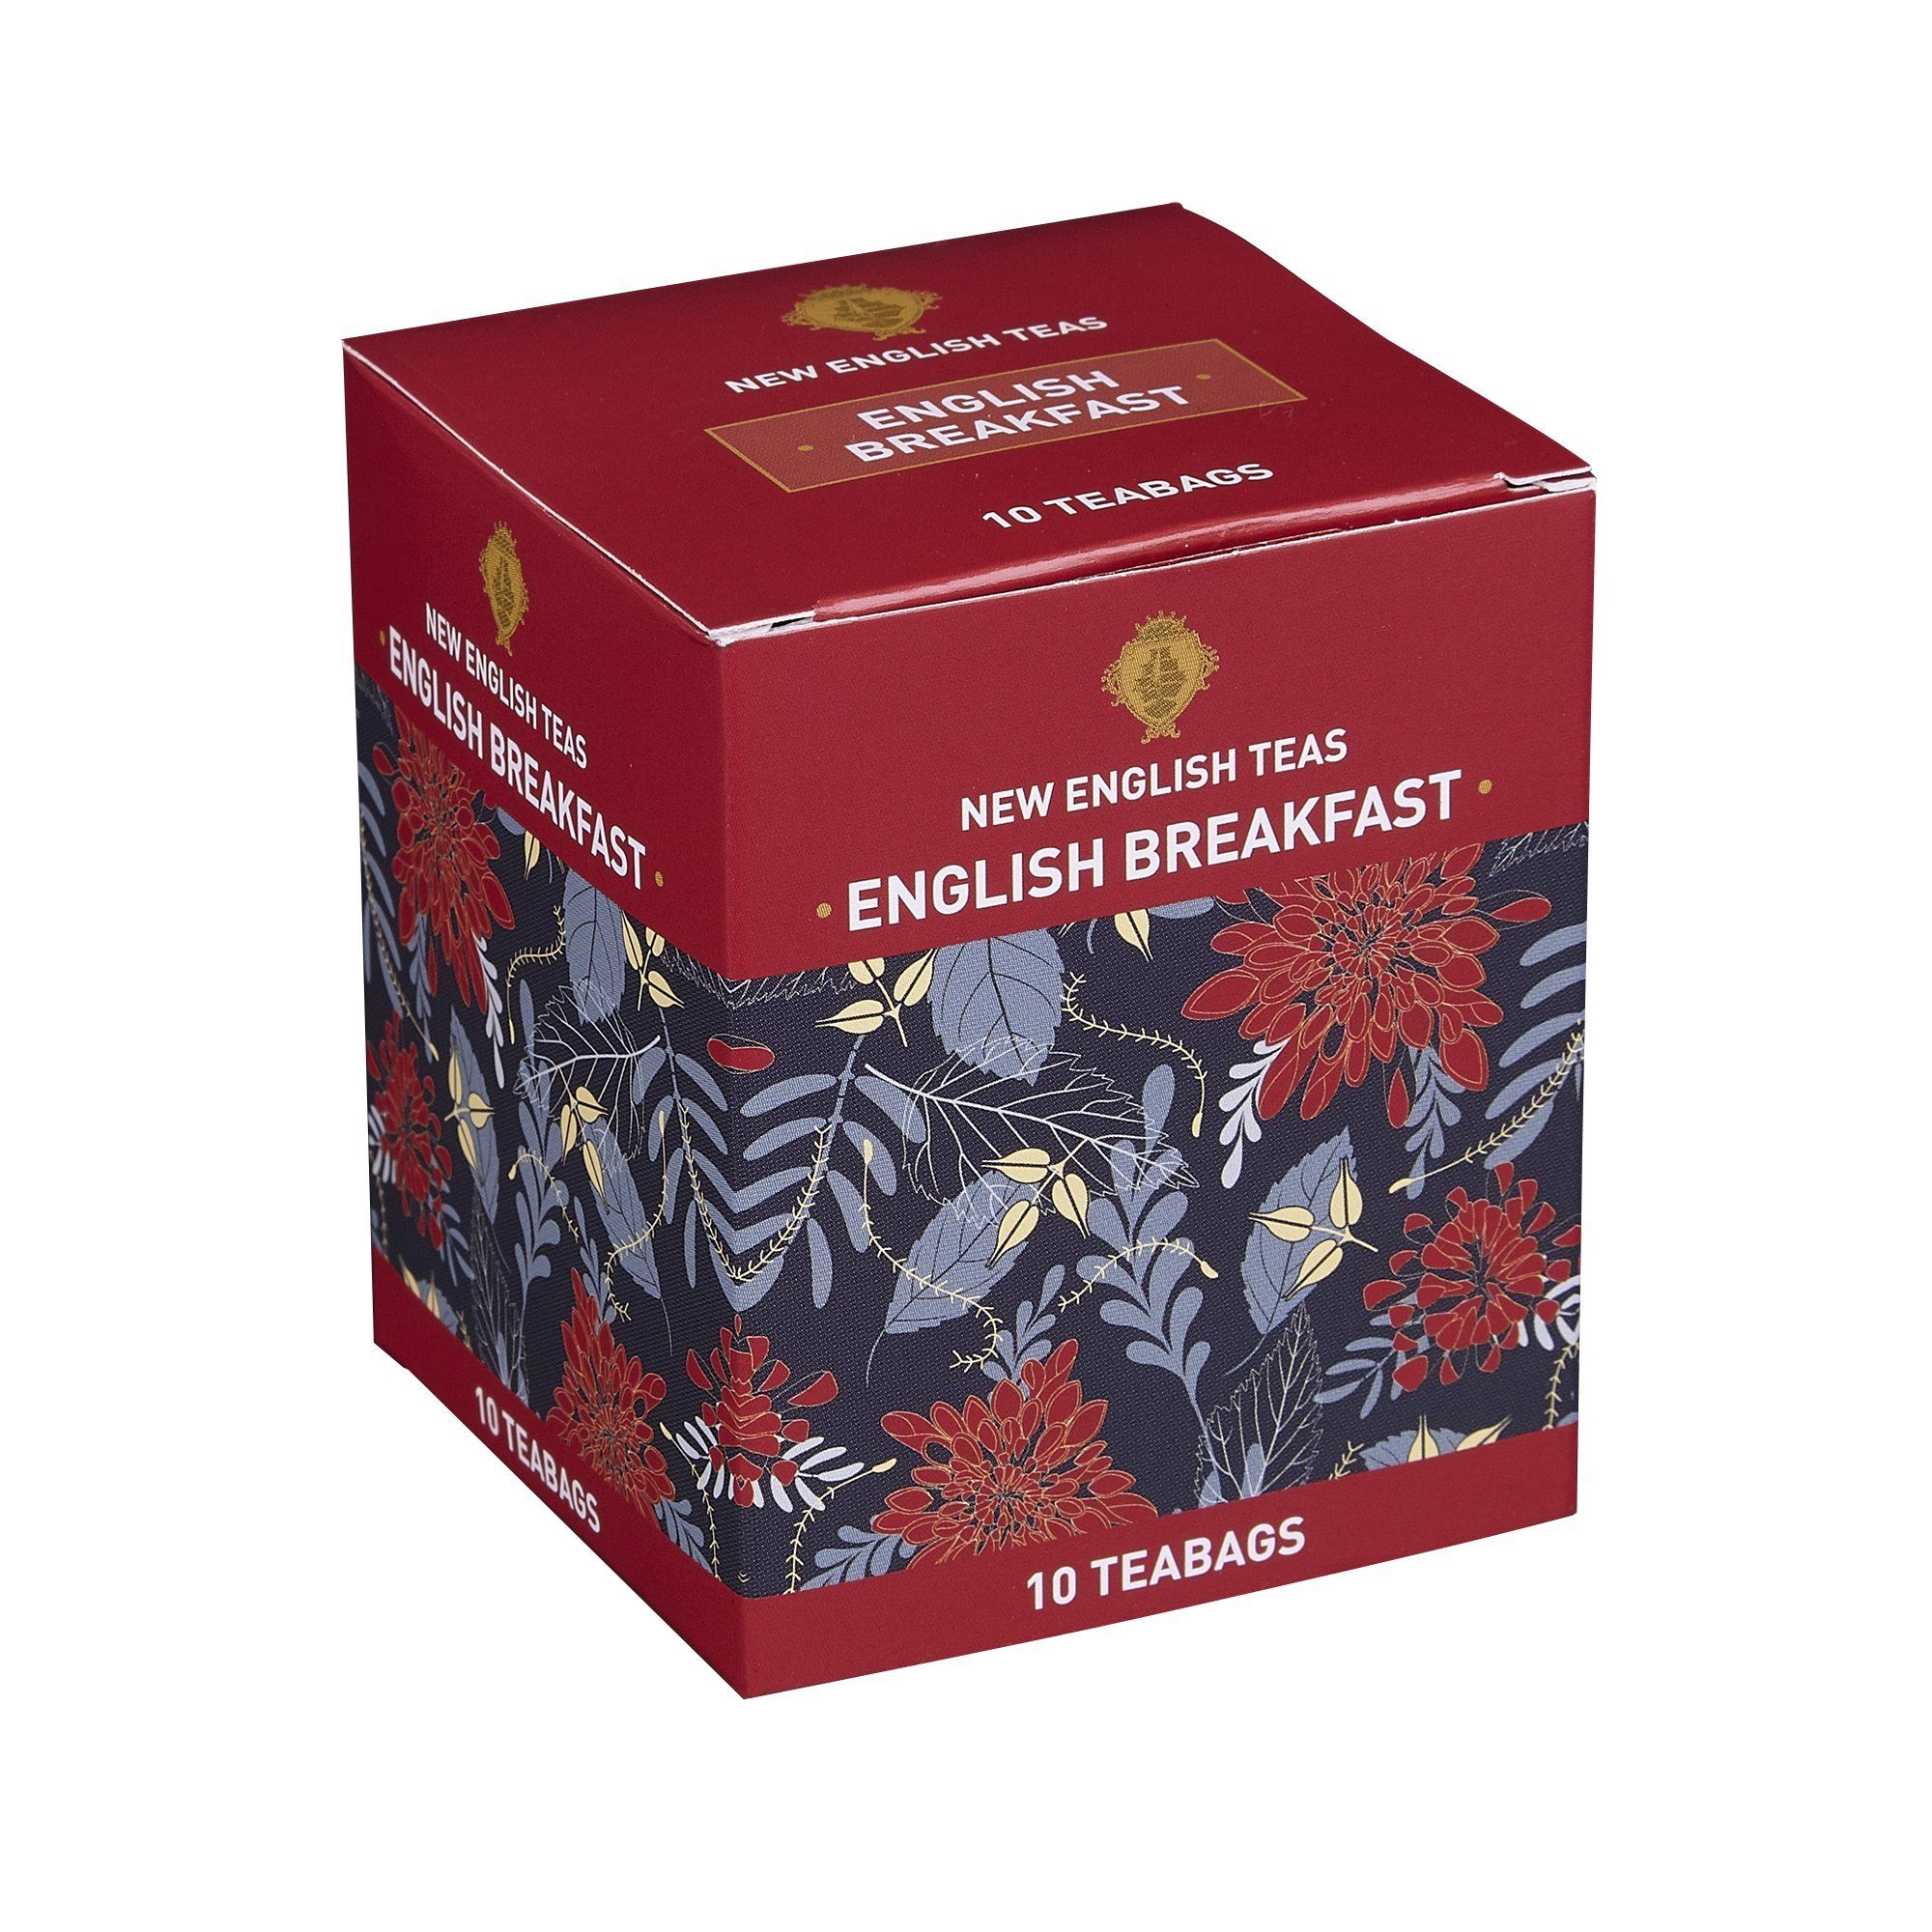 English Breakfast Tea 10 Individually Wrapped Teabags Black Tea New English Teas 